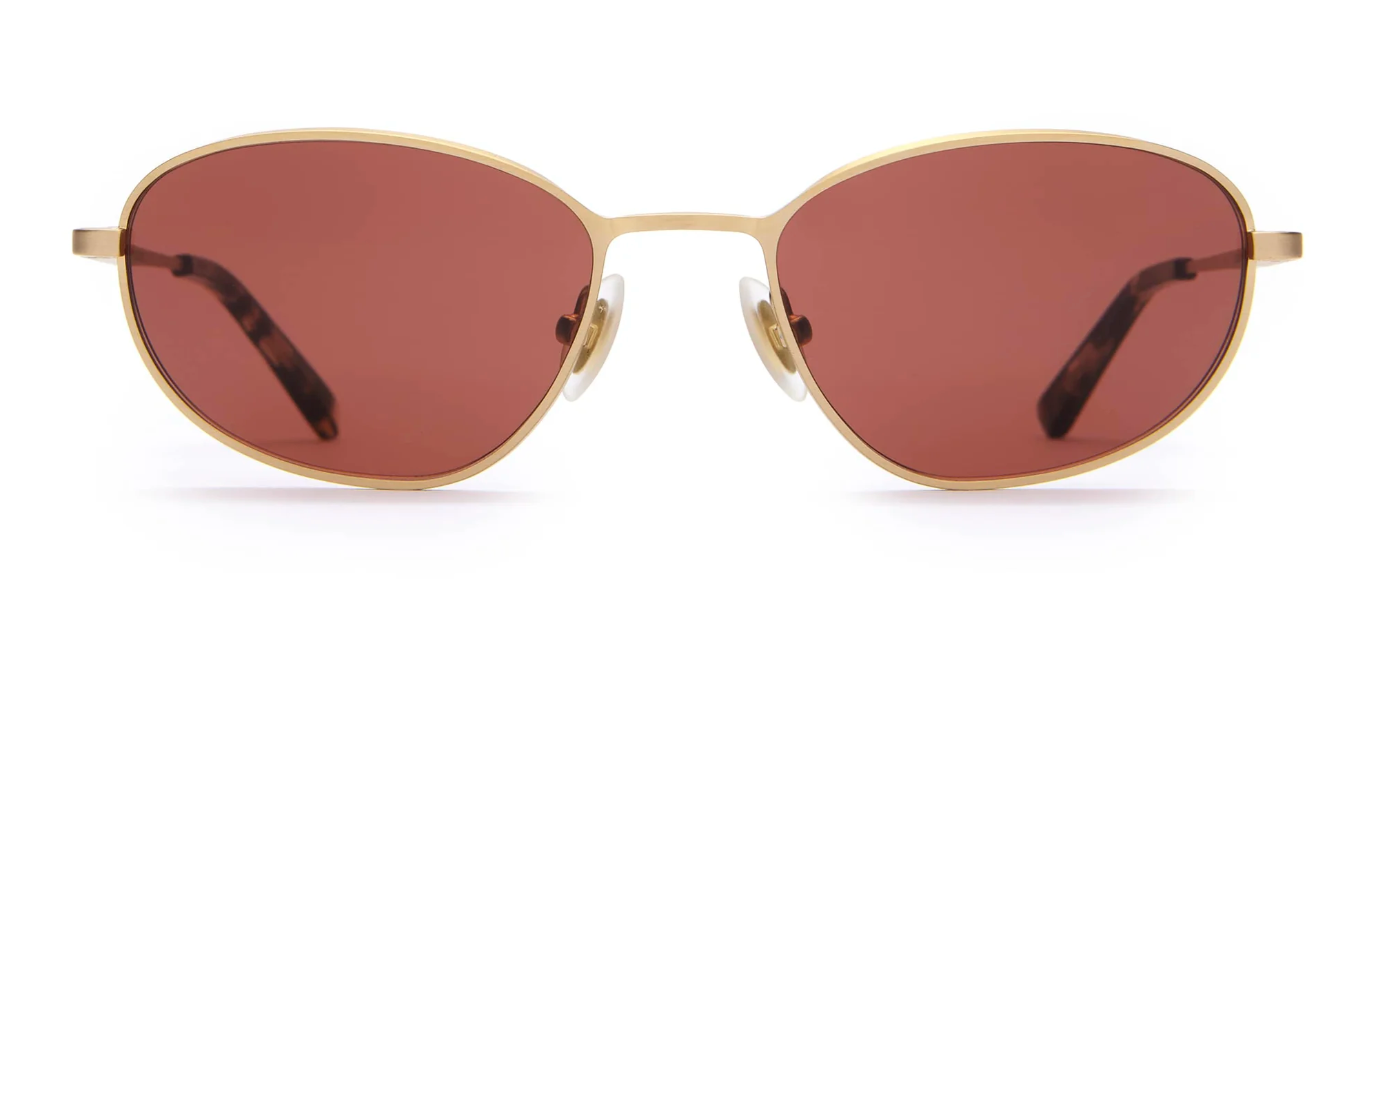 The Perma Joy Sunglasses